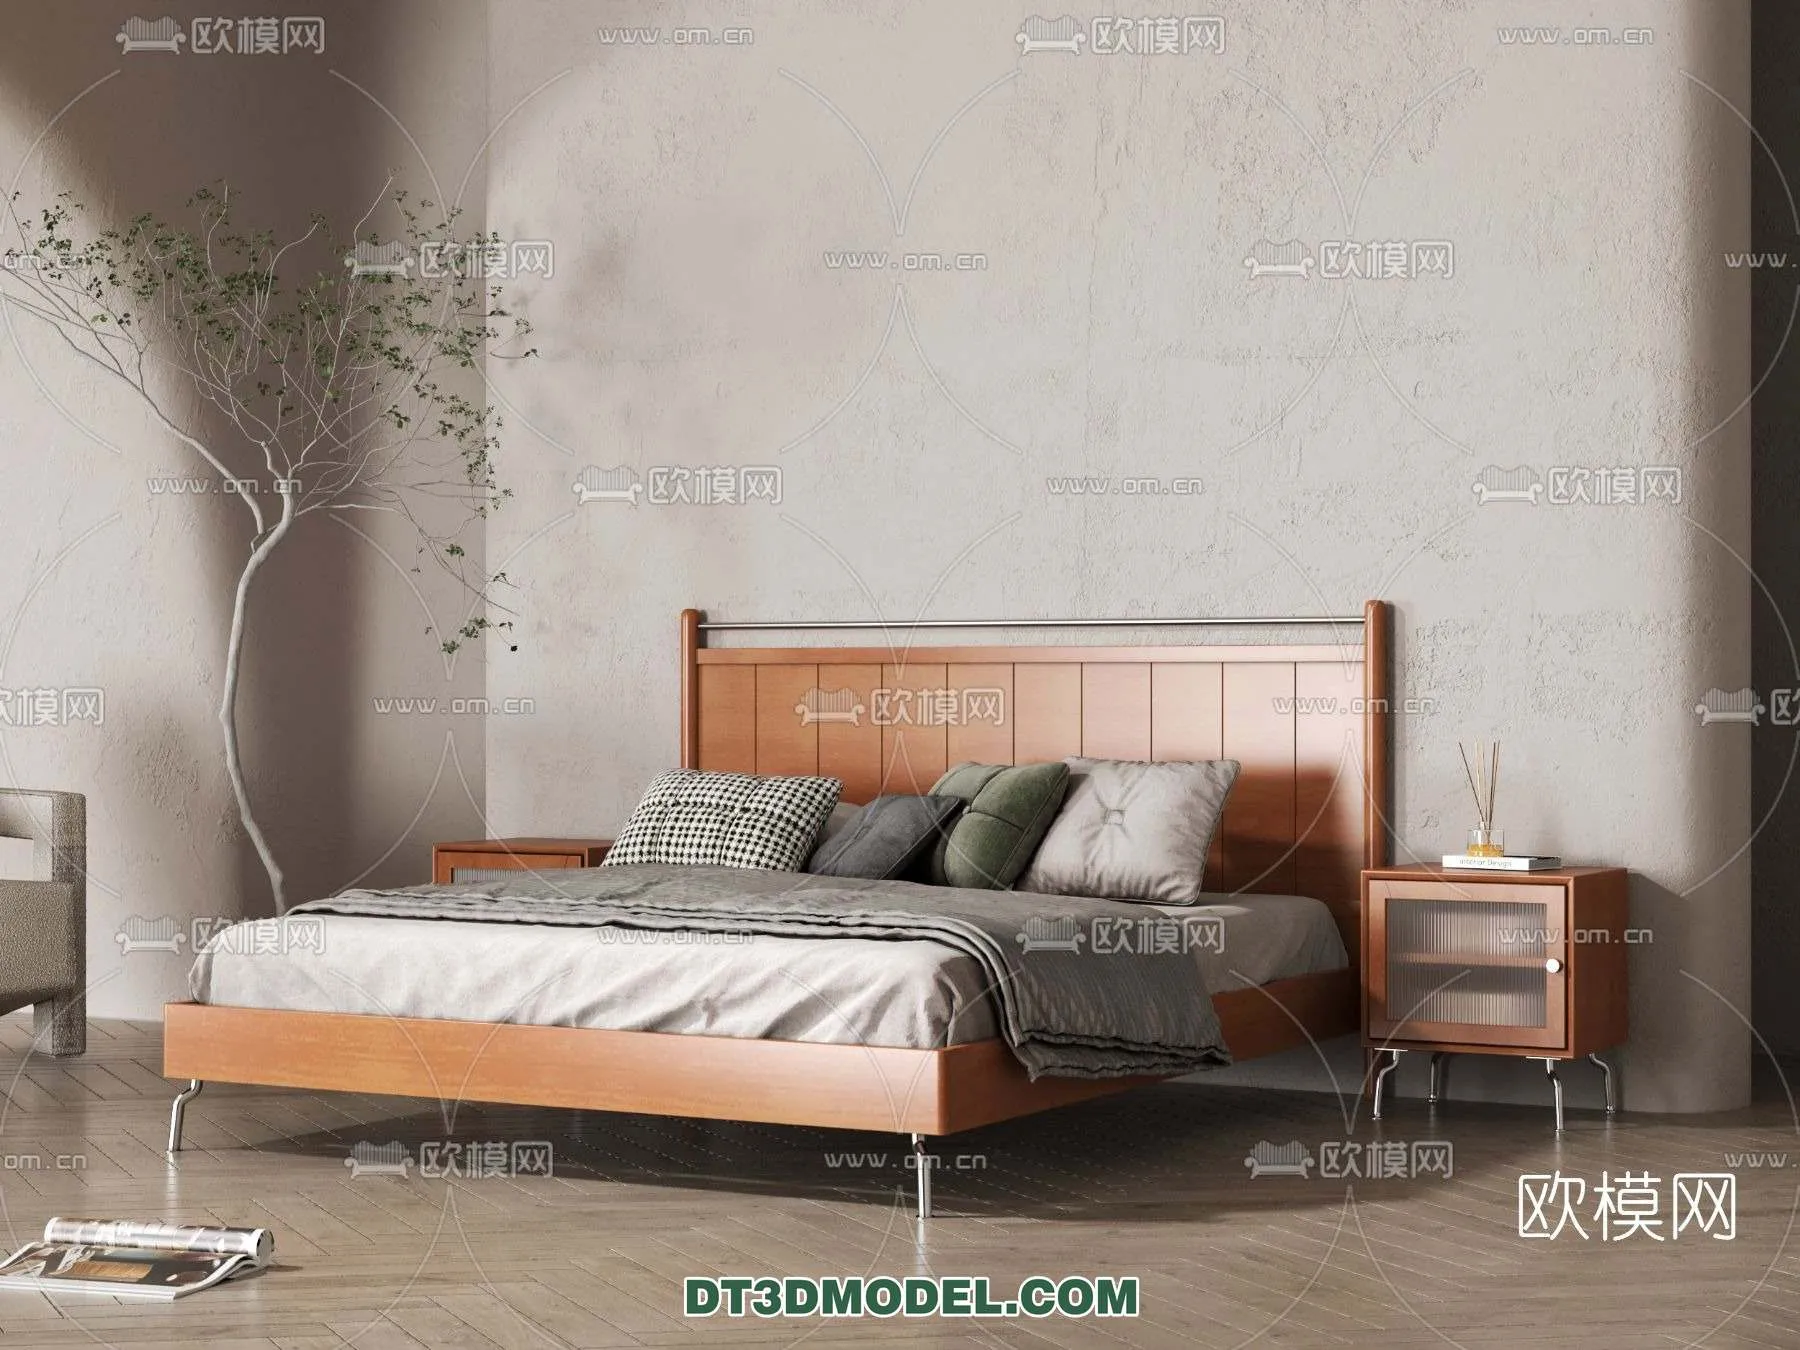 Double Bed 3D Models – 0034